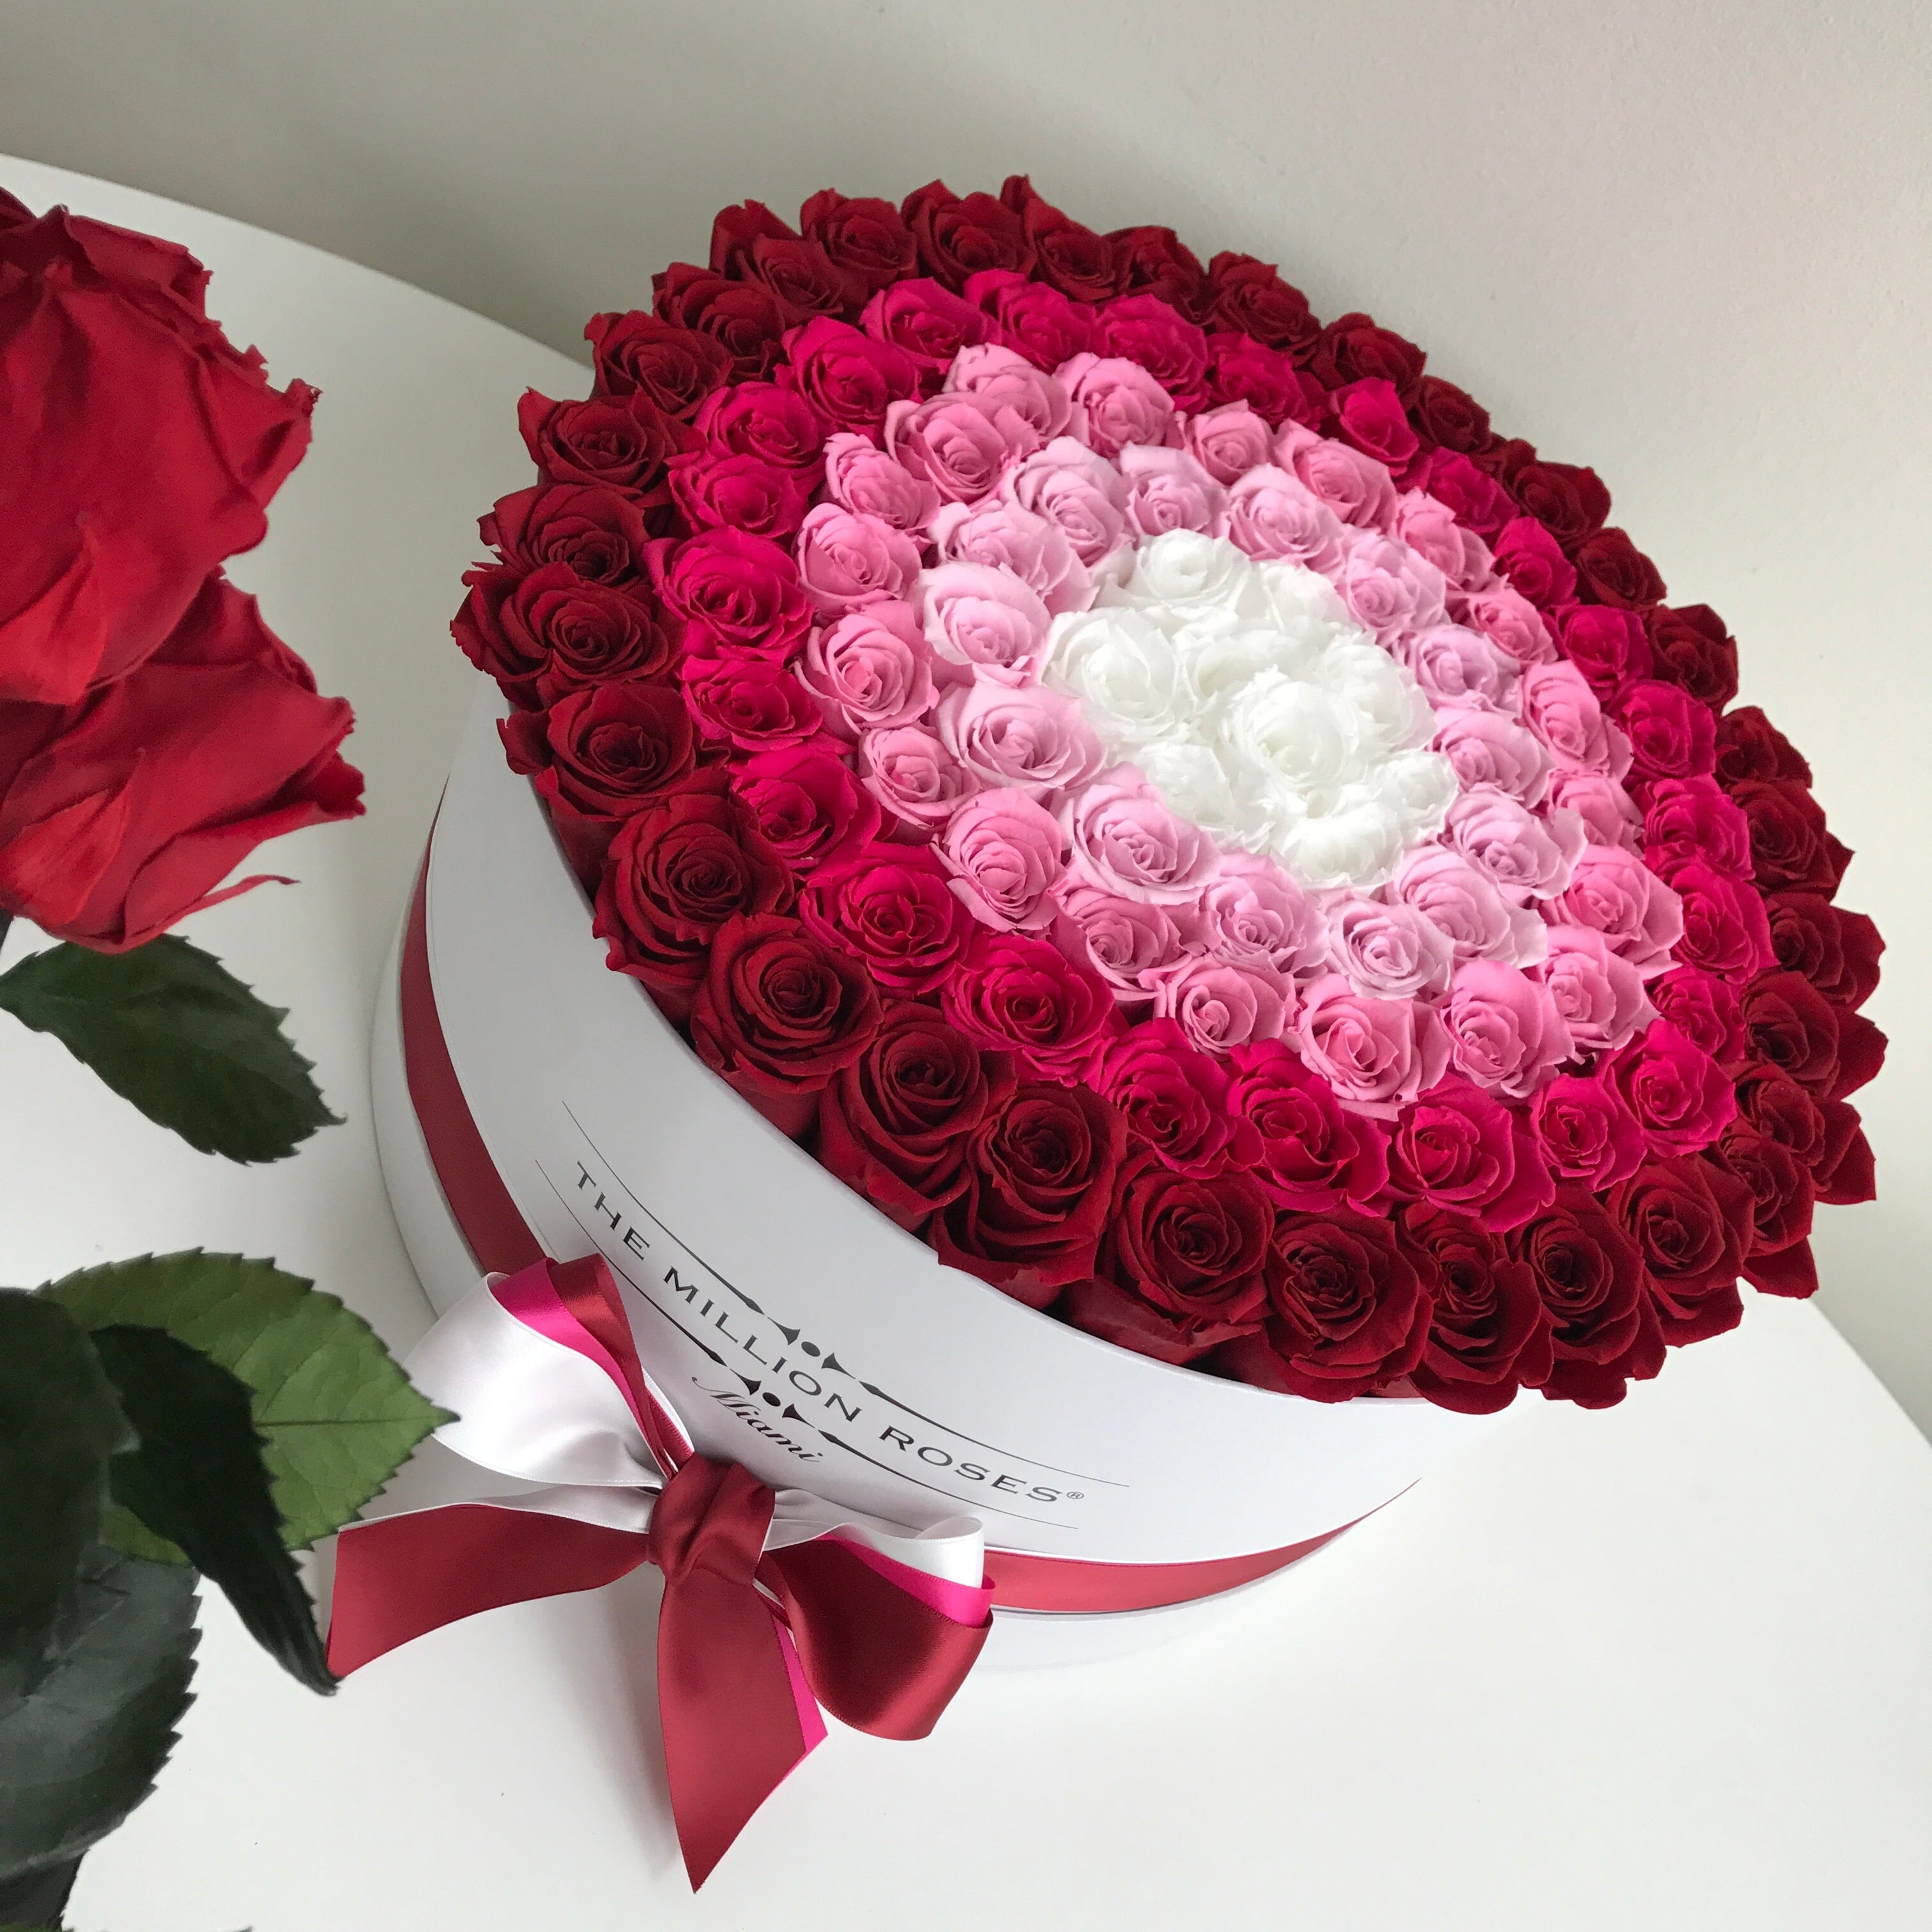 Forever Roses I Love U Box - Black / Red - Custom Color Roses by